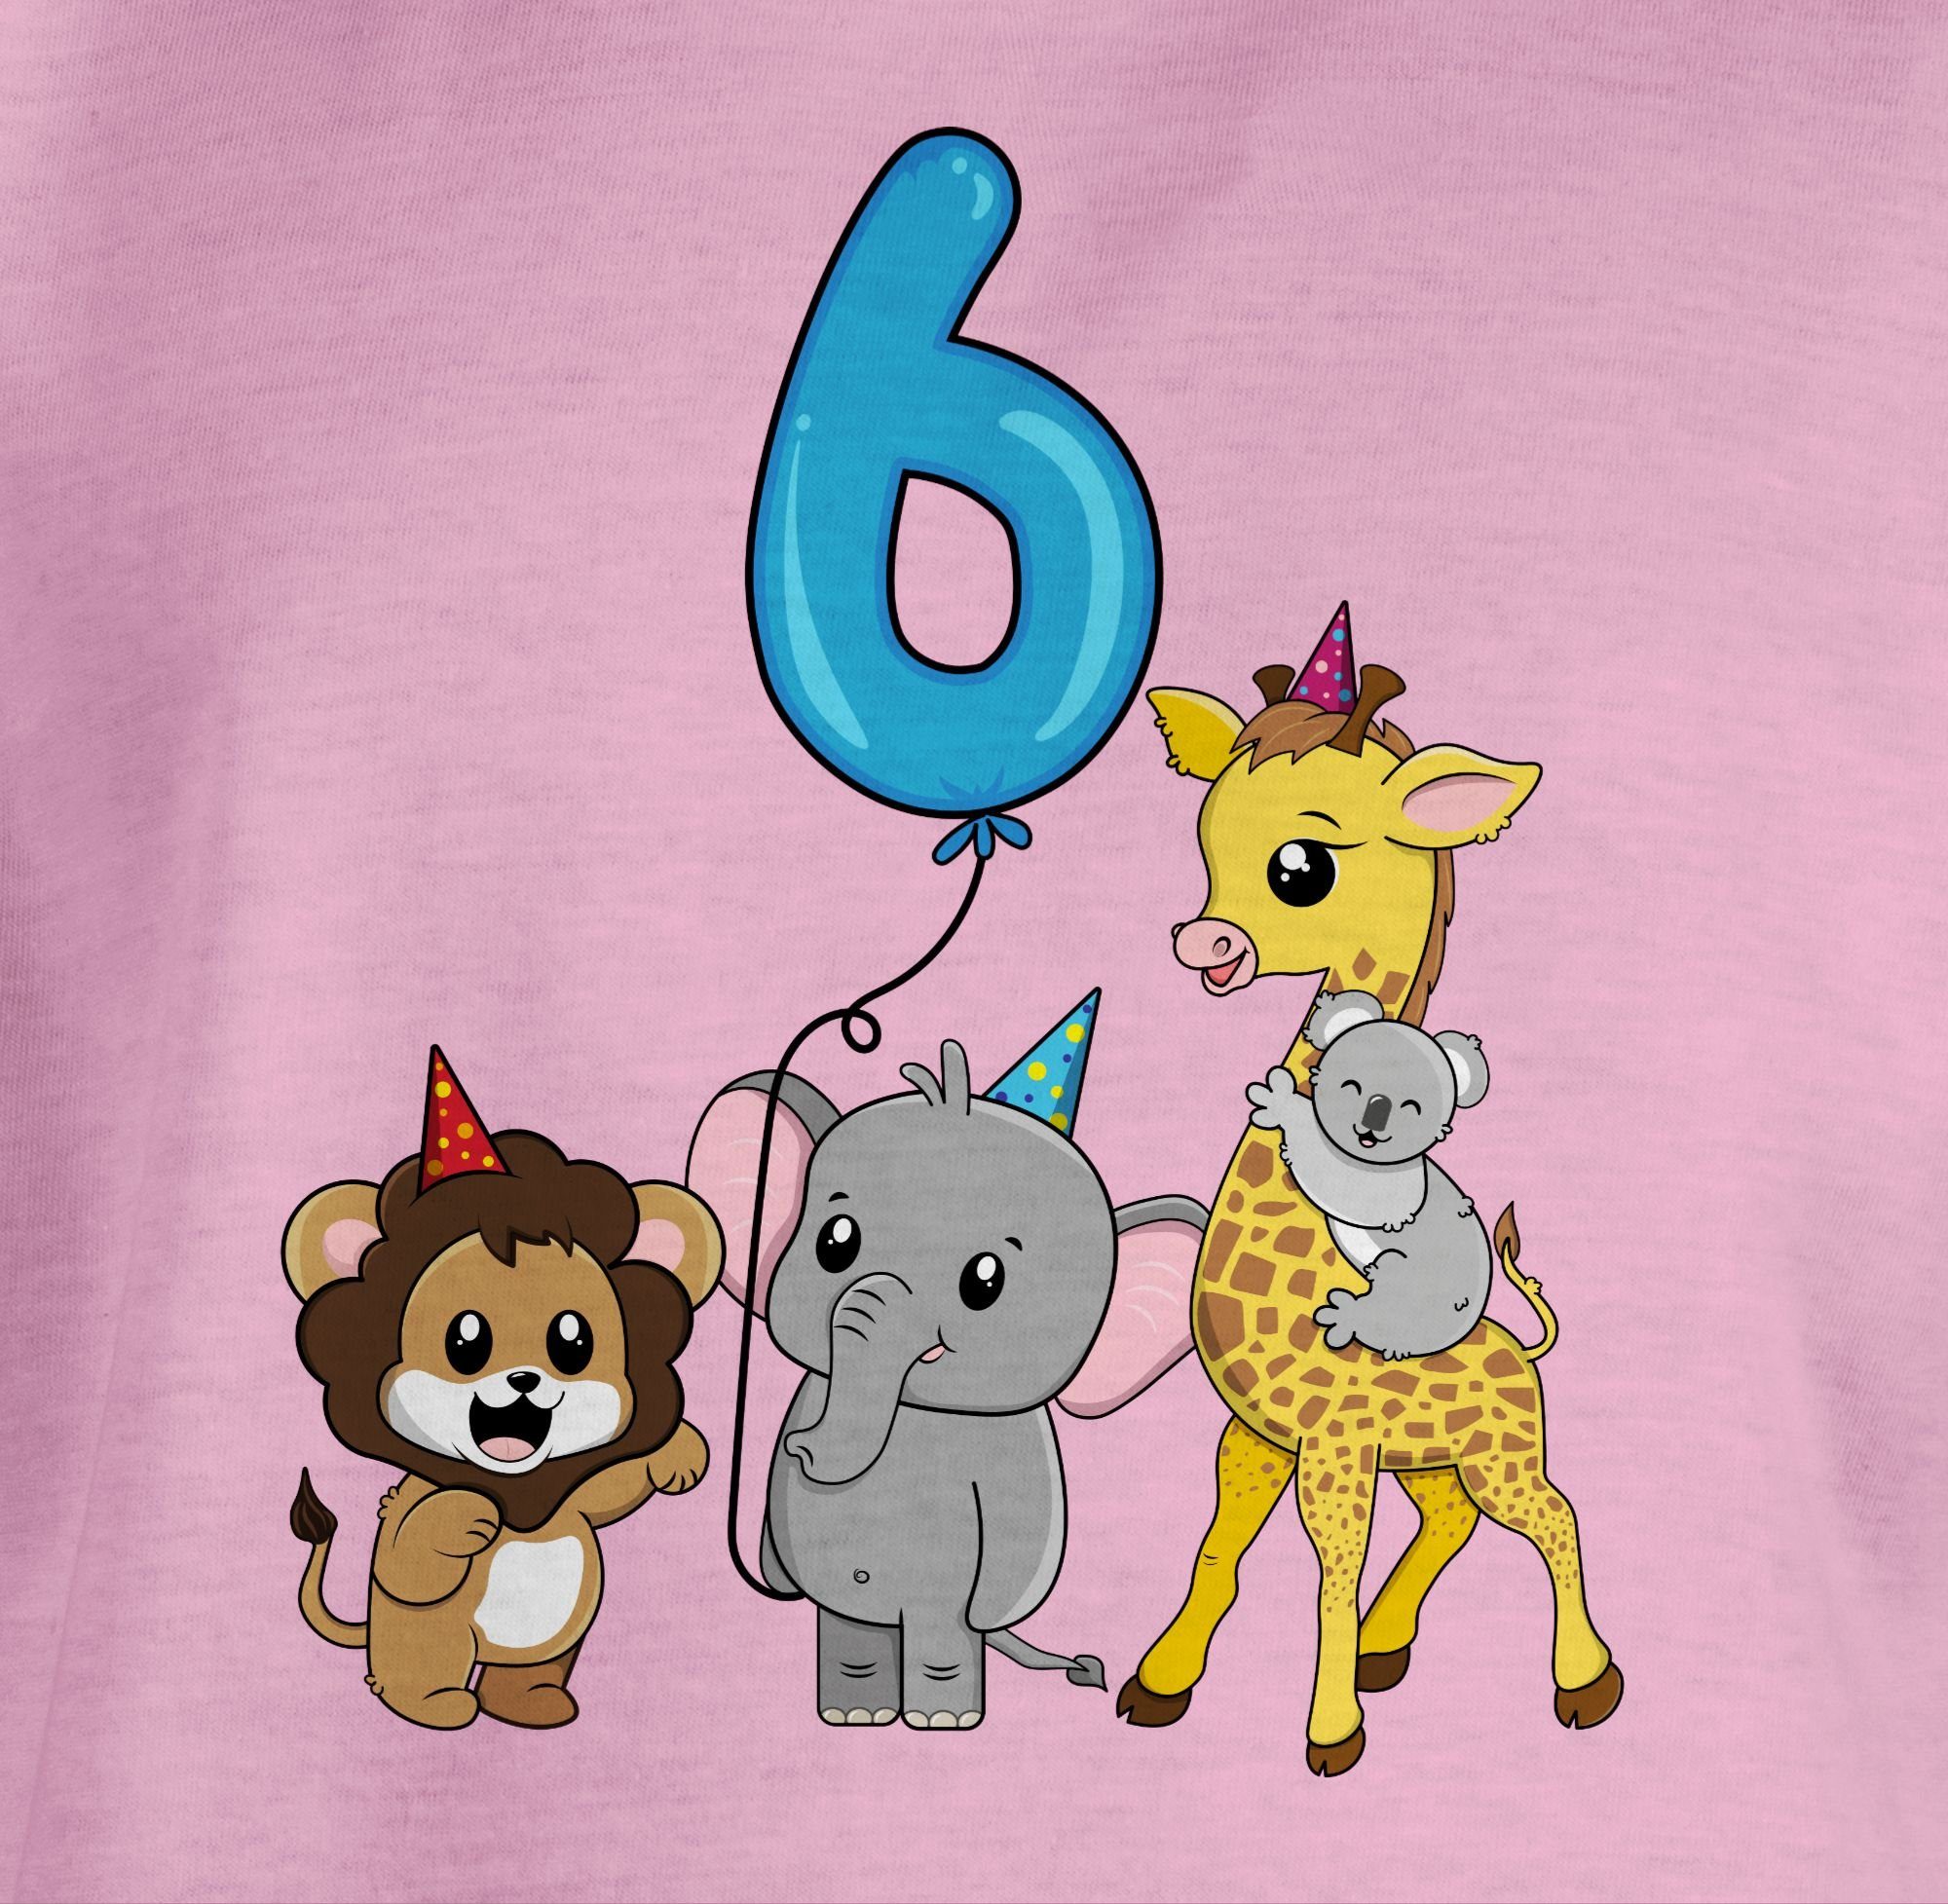 Kinder Kids (Gr. 92 -146) Shirtracer T-Shirt Tiere mit Ballon Sechster - 6. Geburtstag - Mädchen Kinder T-Shirt